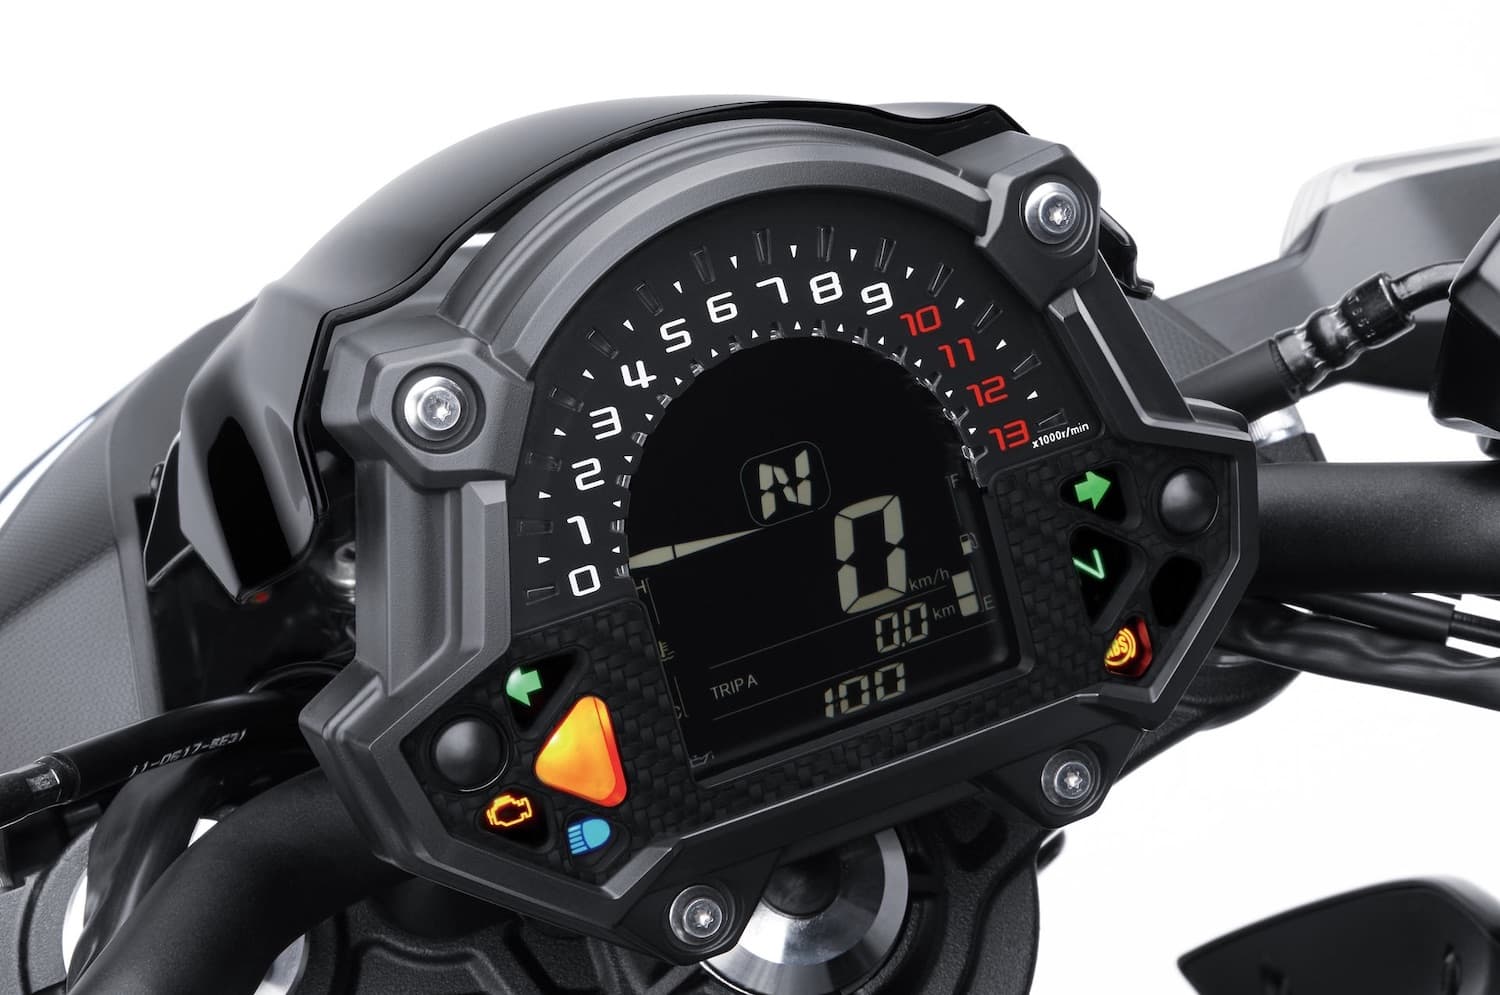 2017 Kawasaki Z650 LCD tachometer